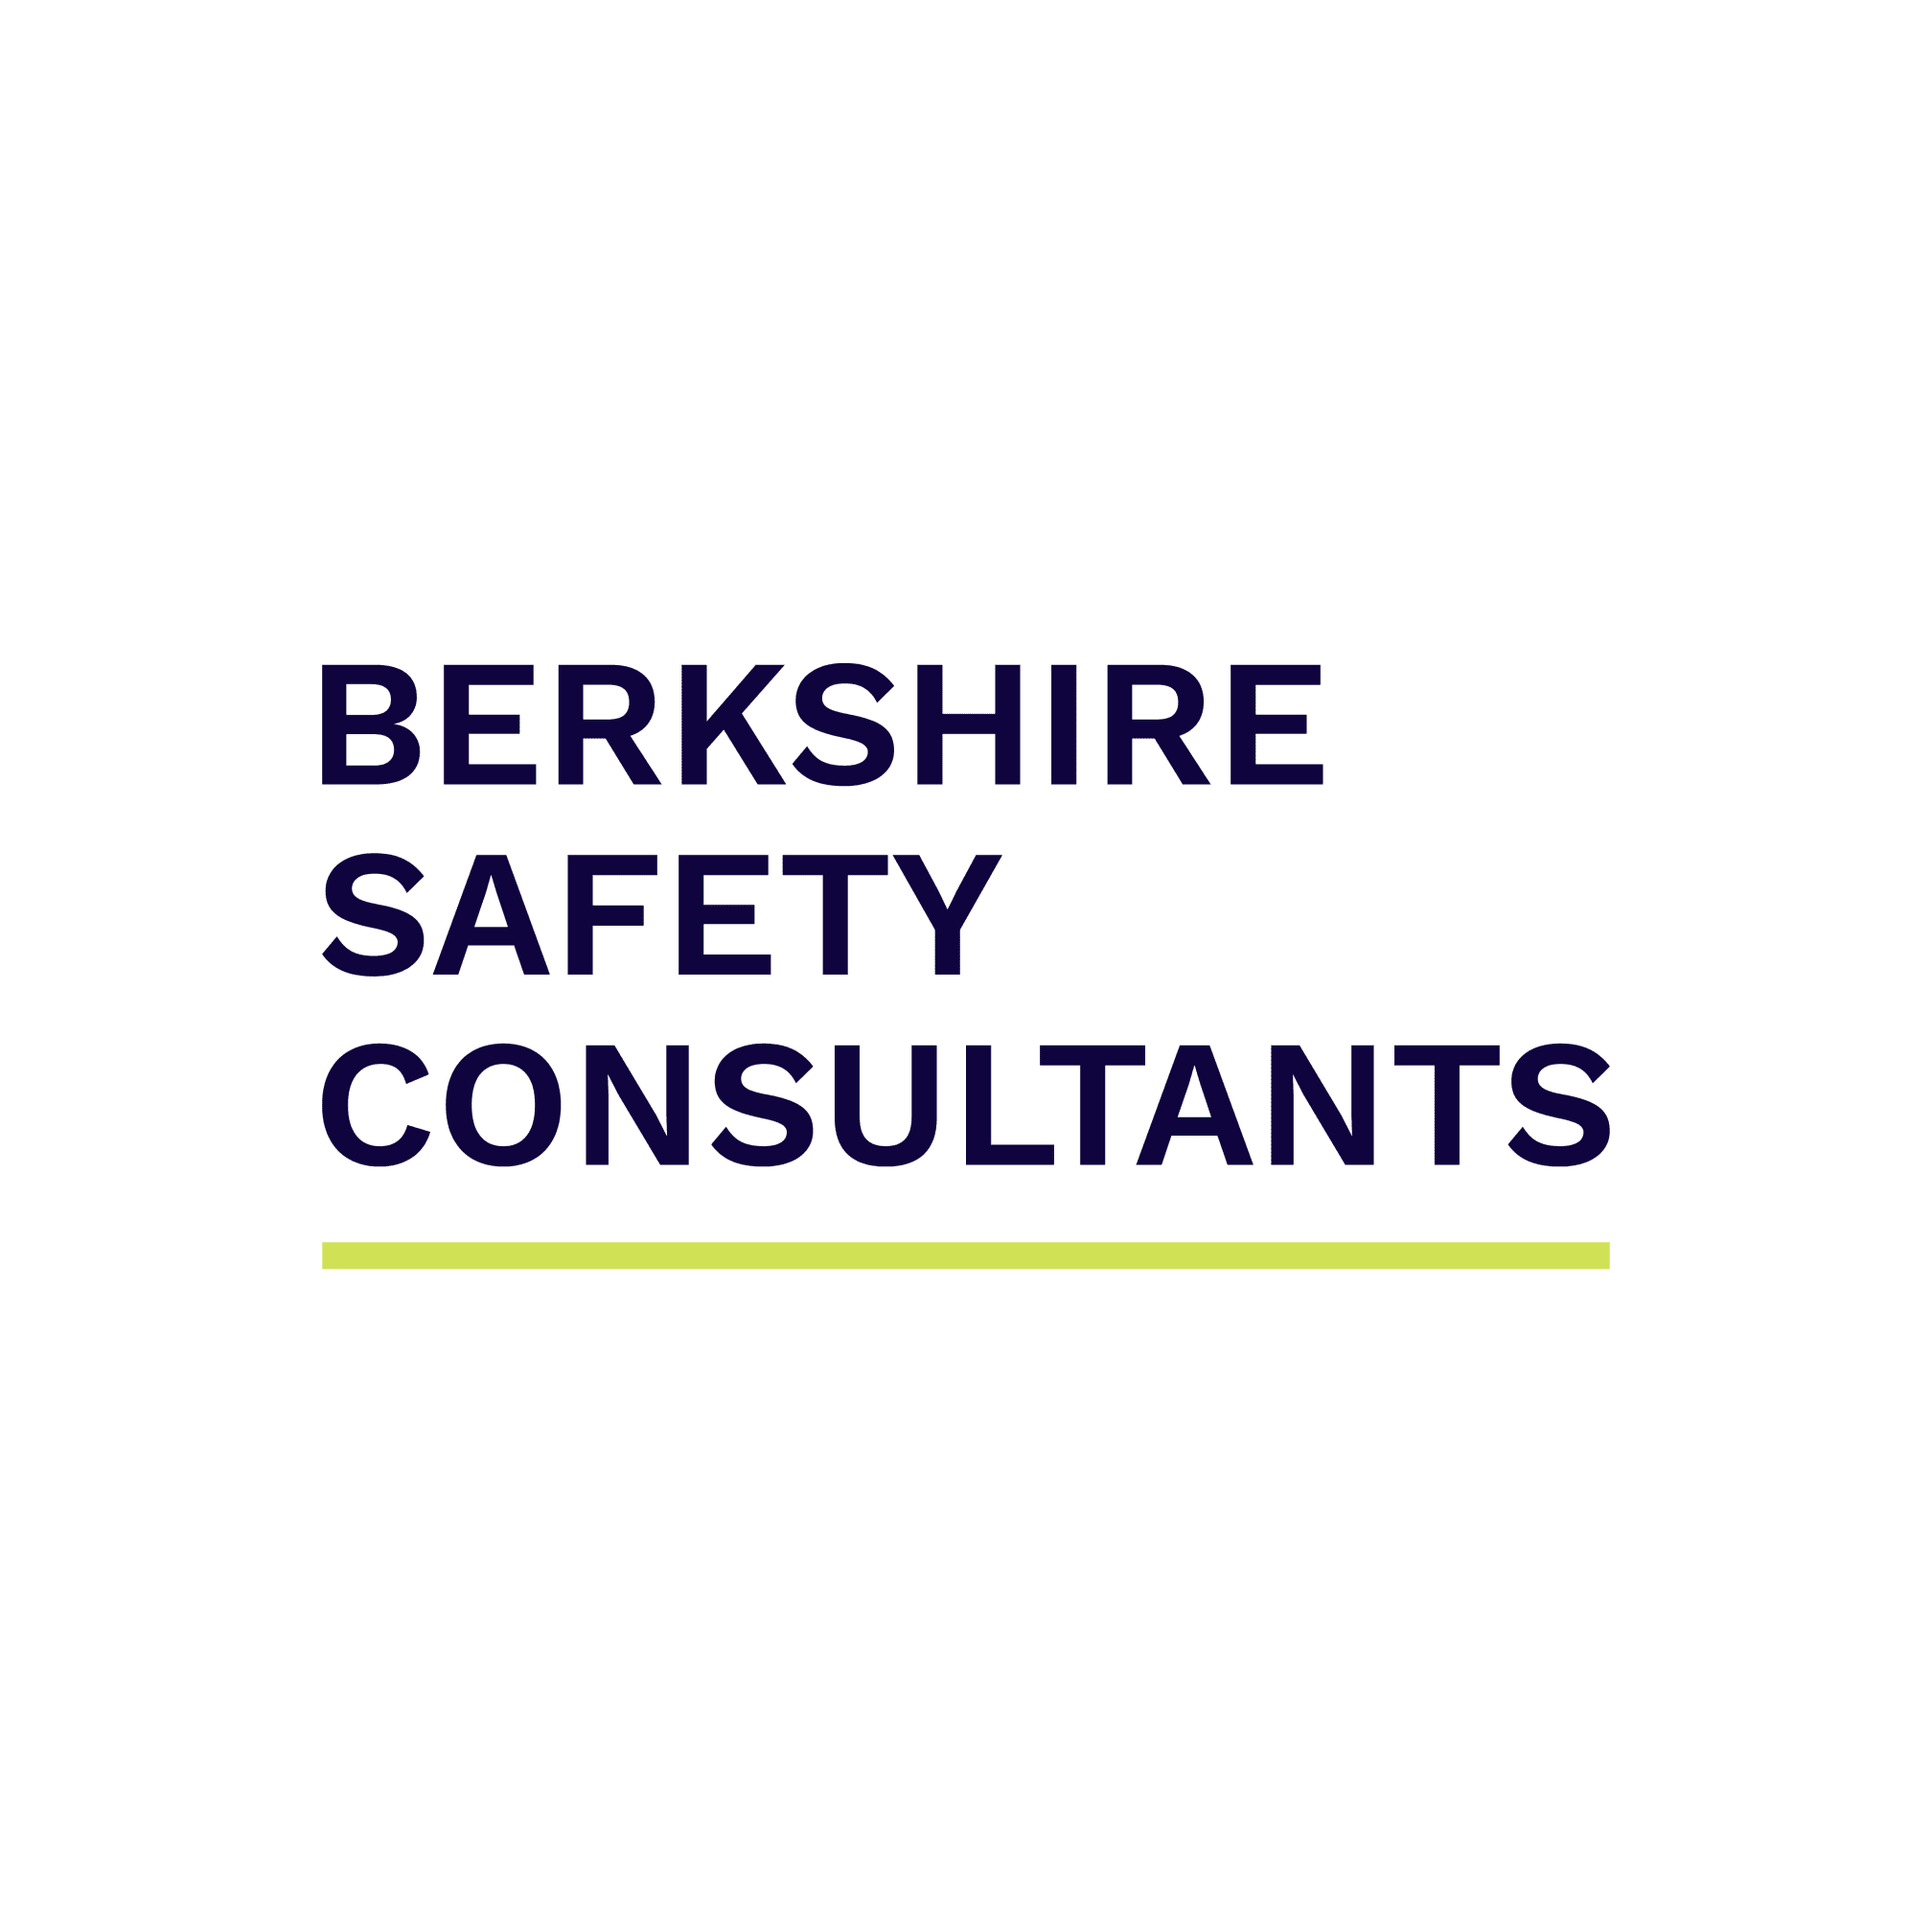 LOGO Berkshire Safety Consultants London 07856 580182